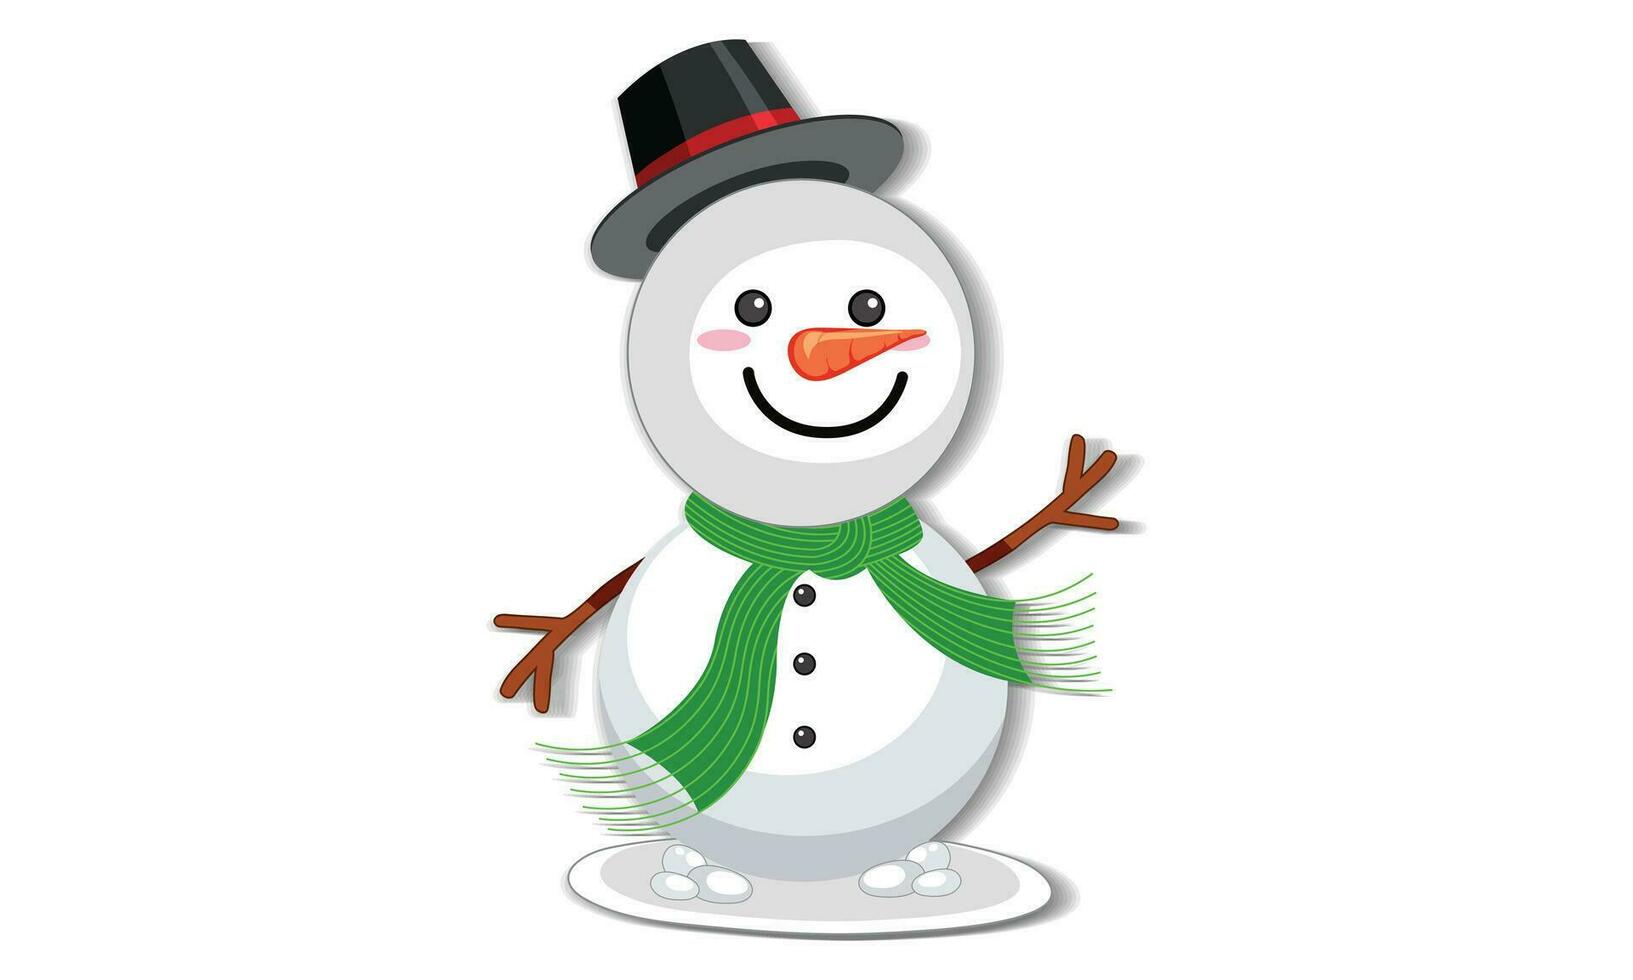 Snowman Christmas Graphic Creepy Clip Art Vector Design, 100 vector illustration design.